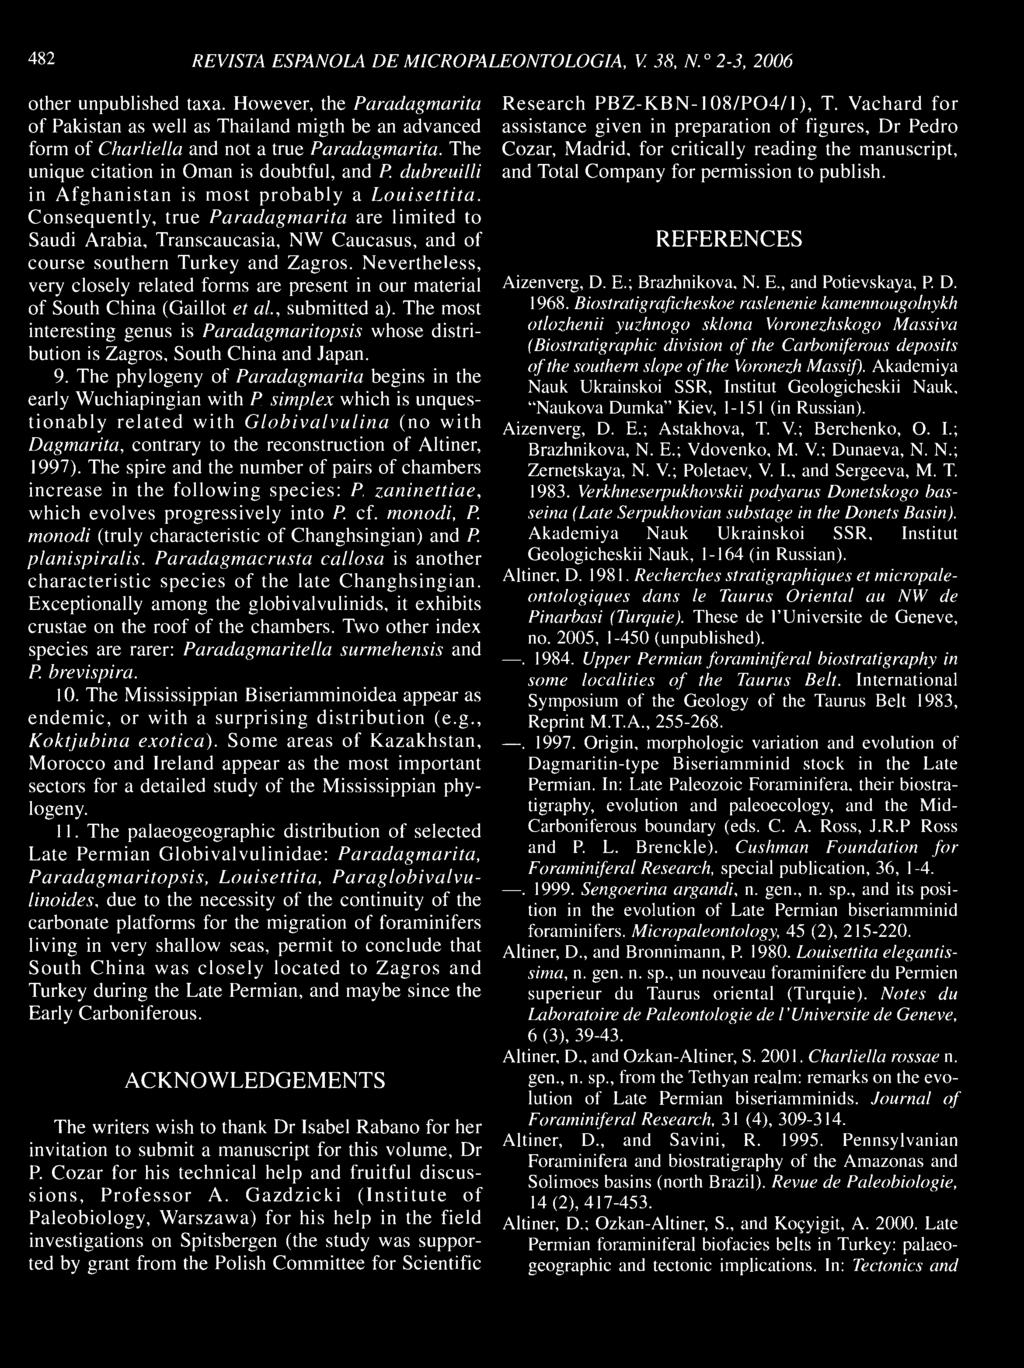 482 REVISTA ESPANOLA DE MICROPALEONTOLOGIA, V. 38, N. 2-3, 2006 other unpublished taxa.